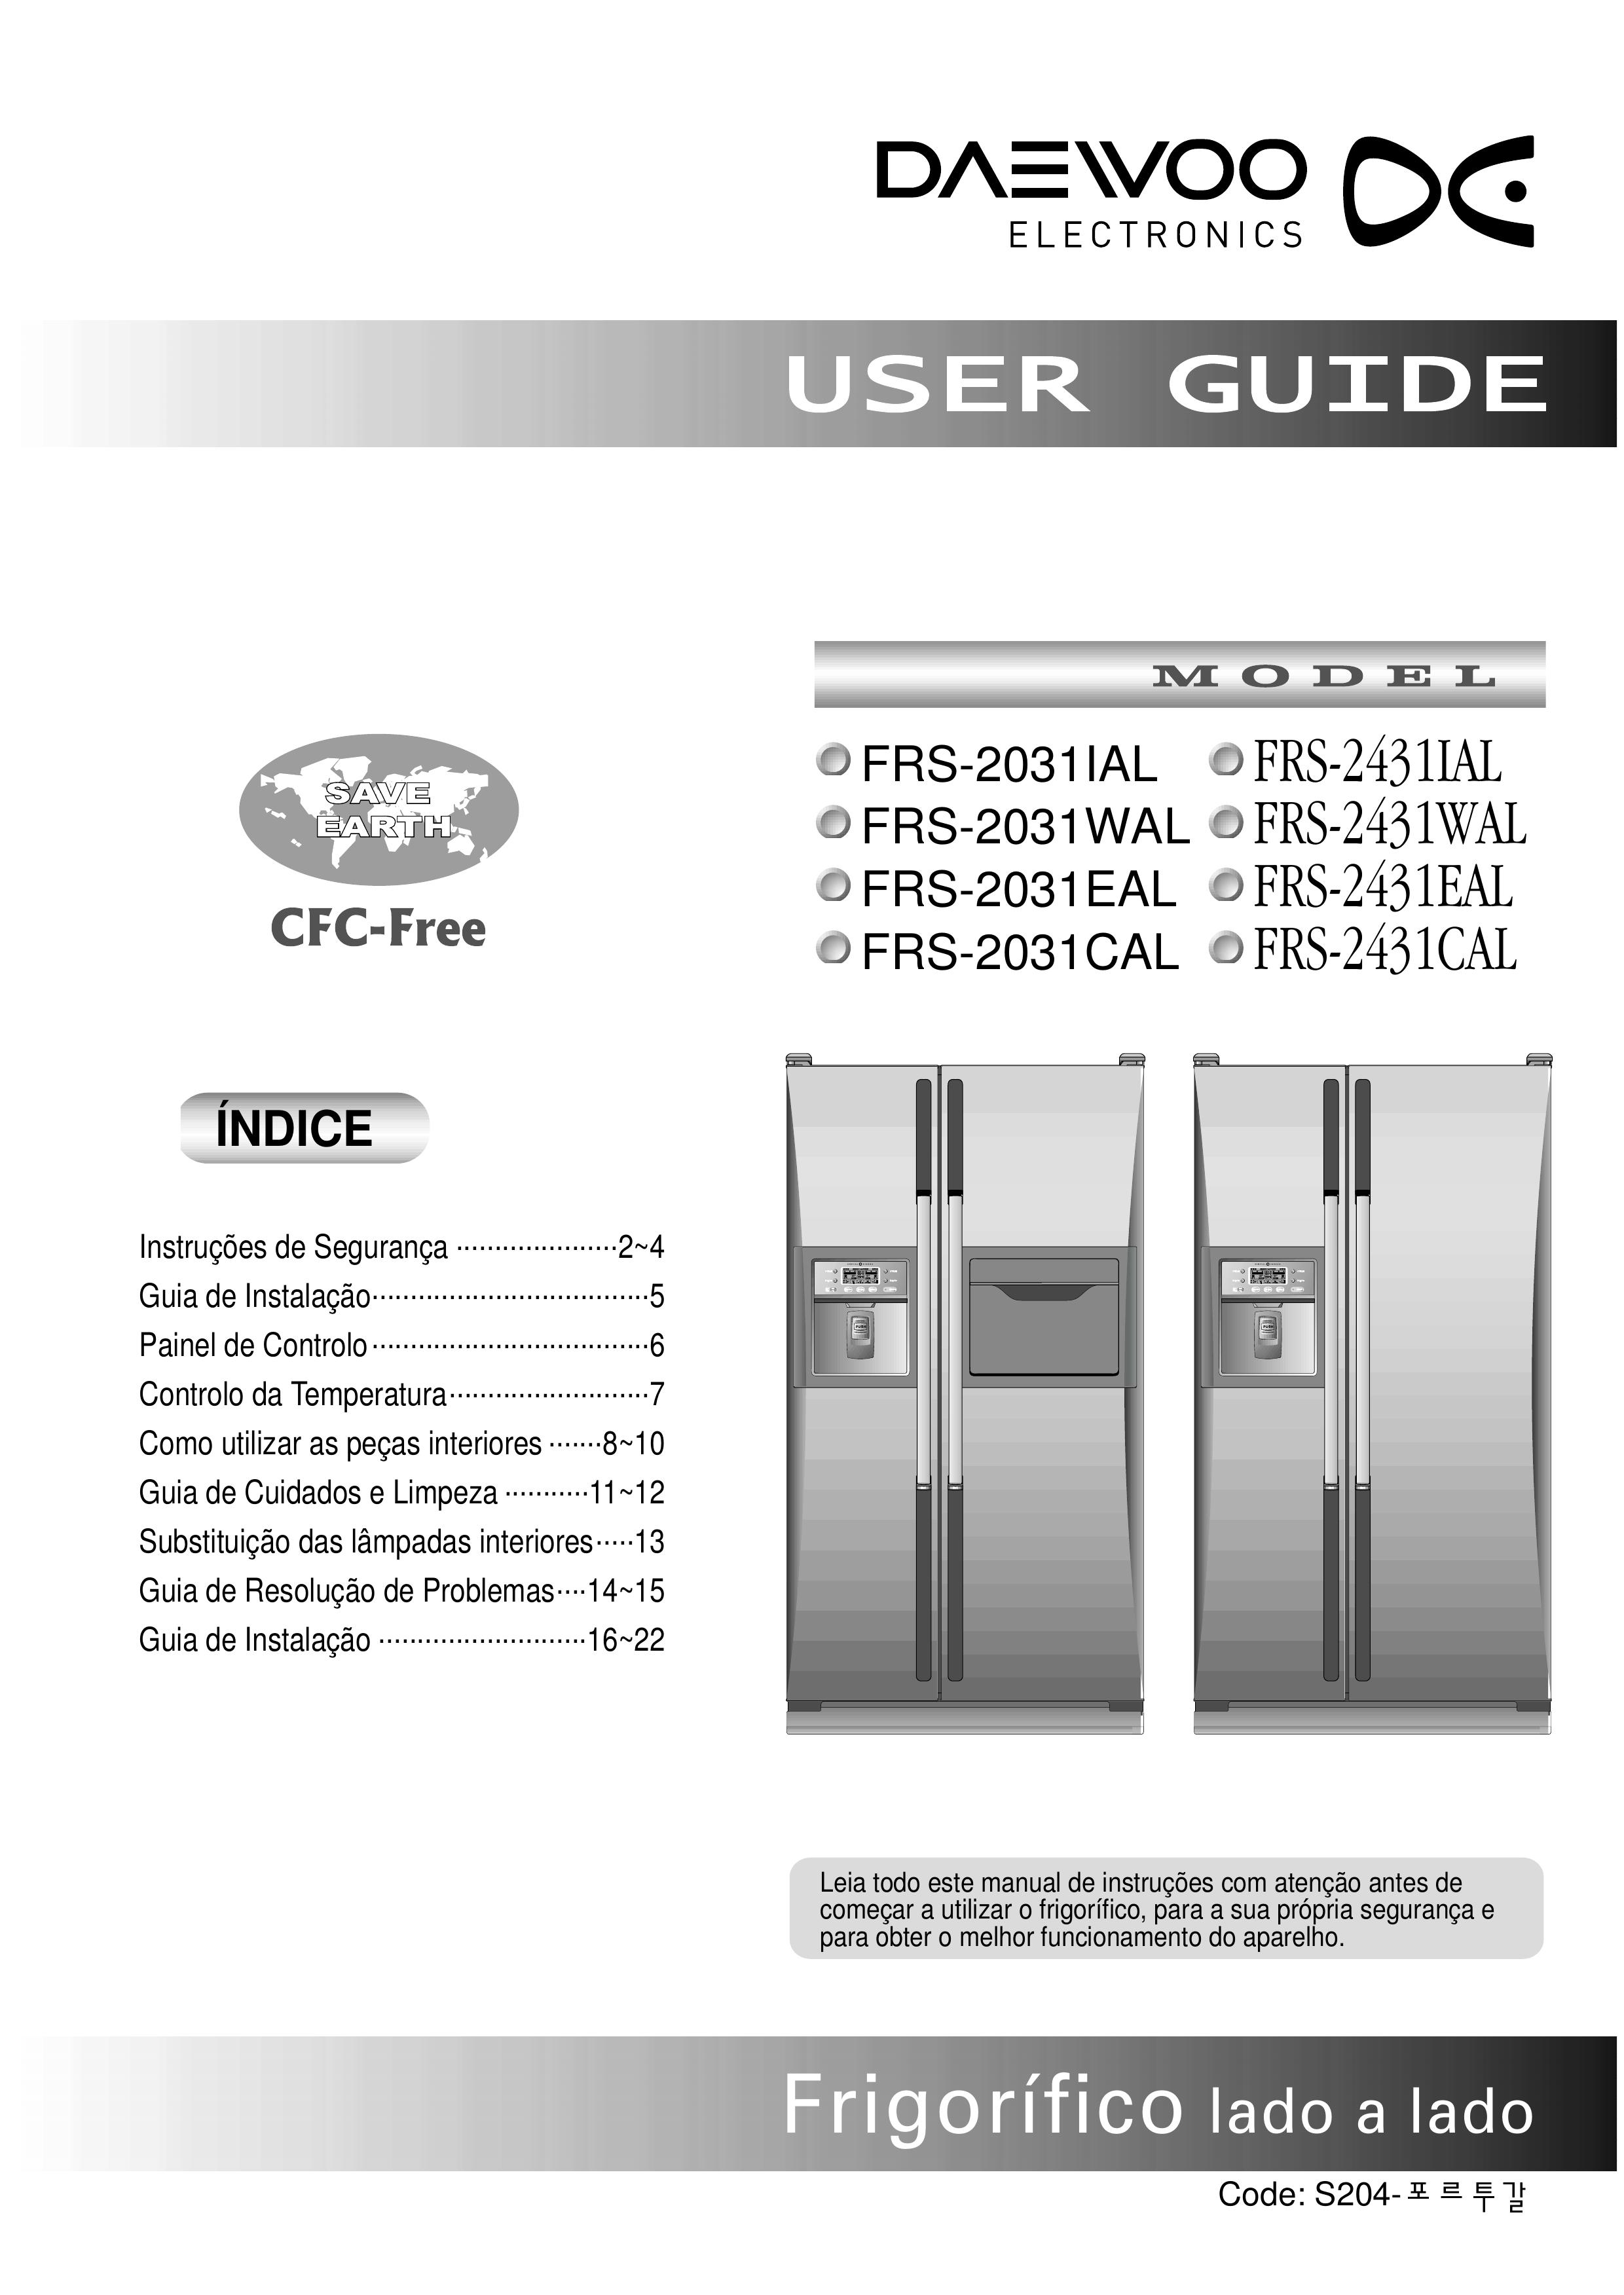 Daewoo FRS-2431CAL Refrigerator User Manual